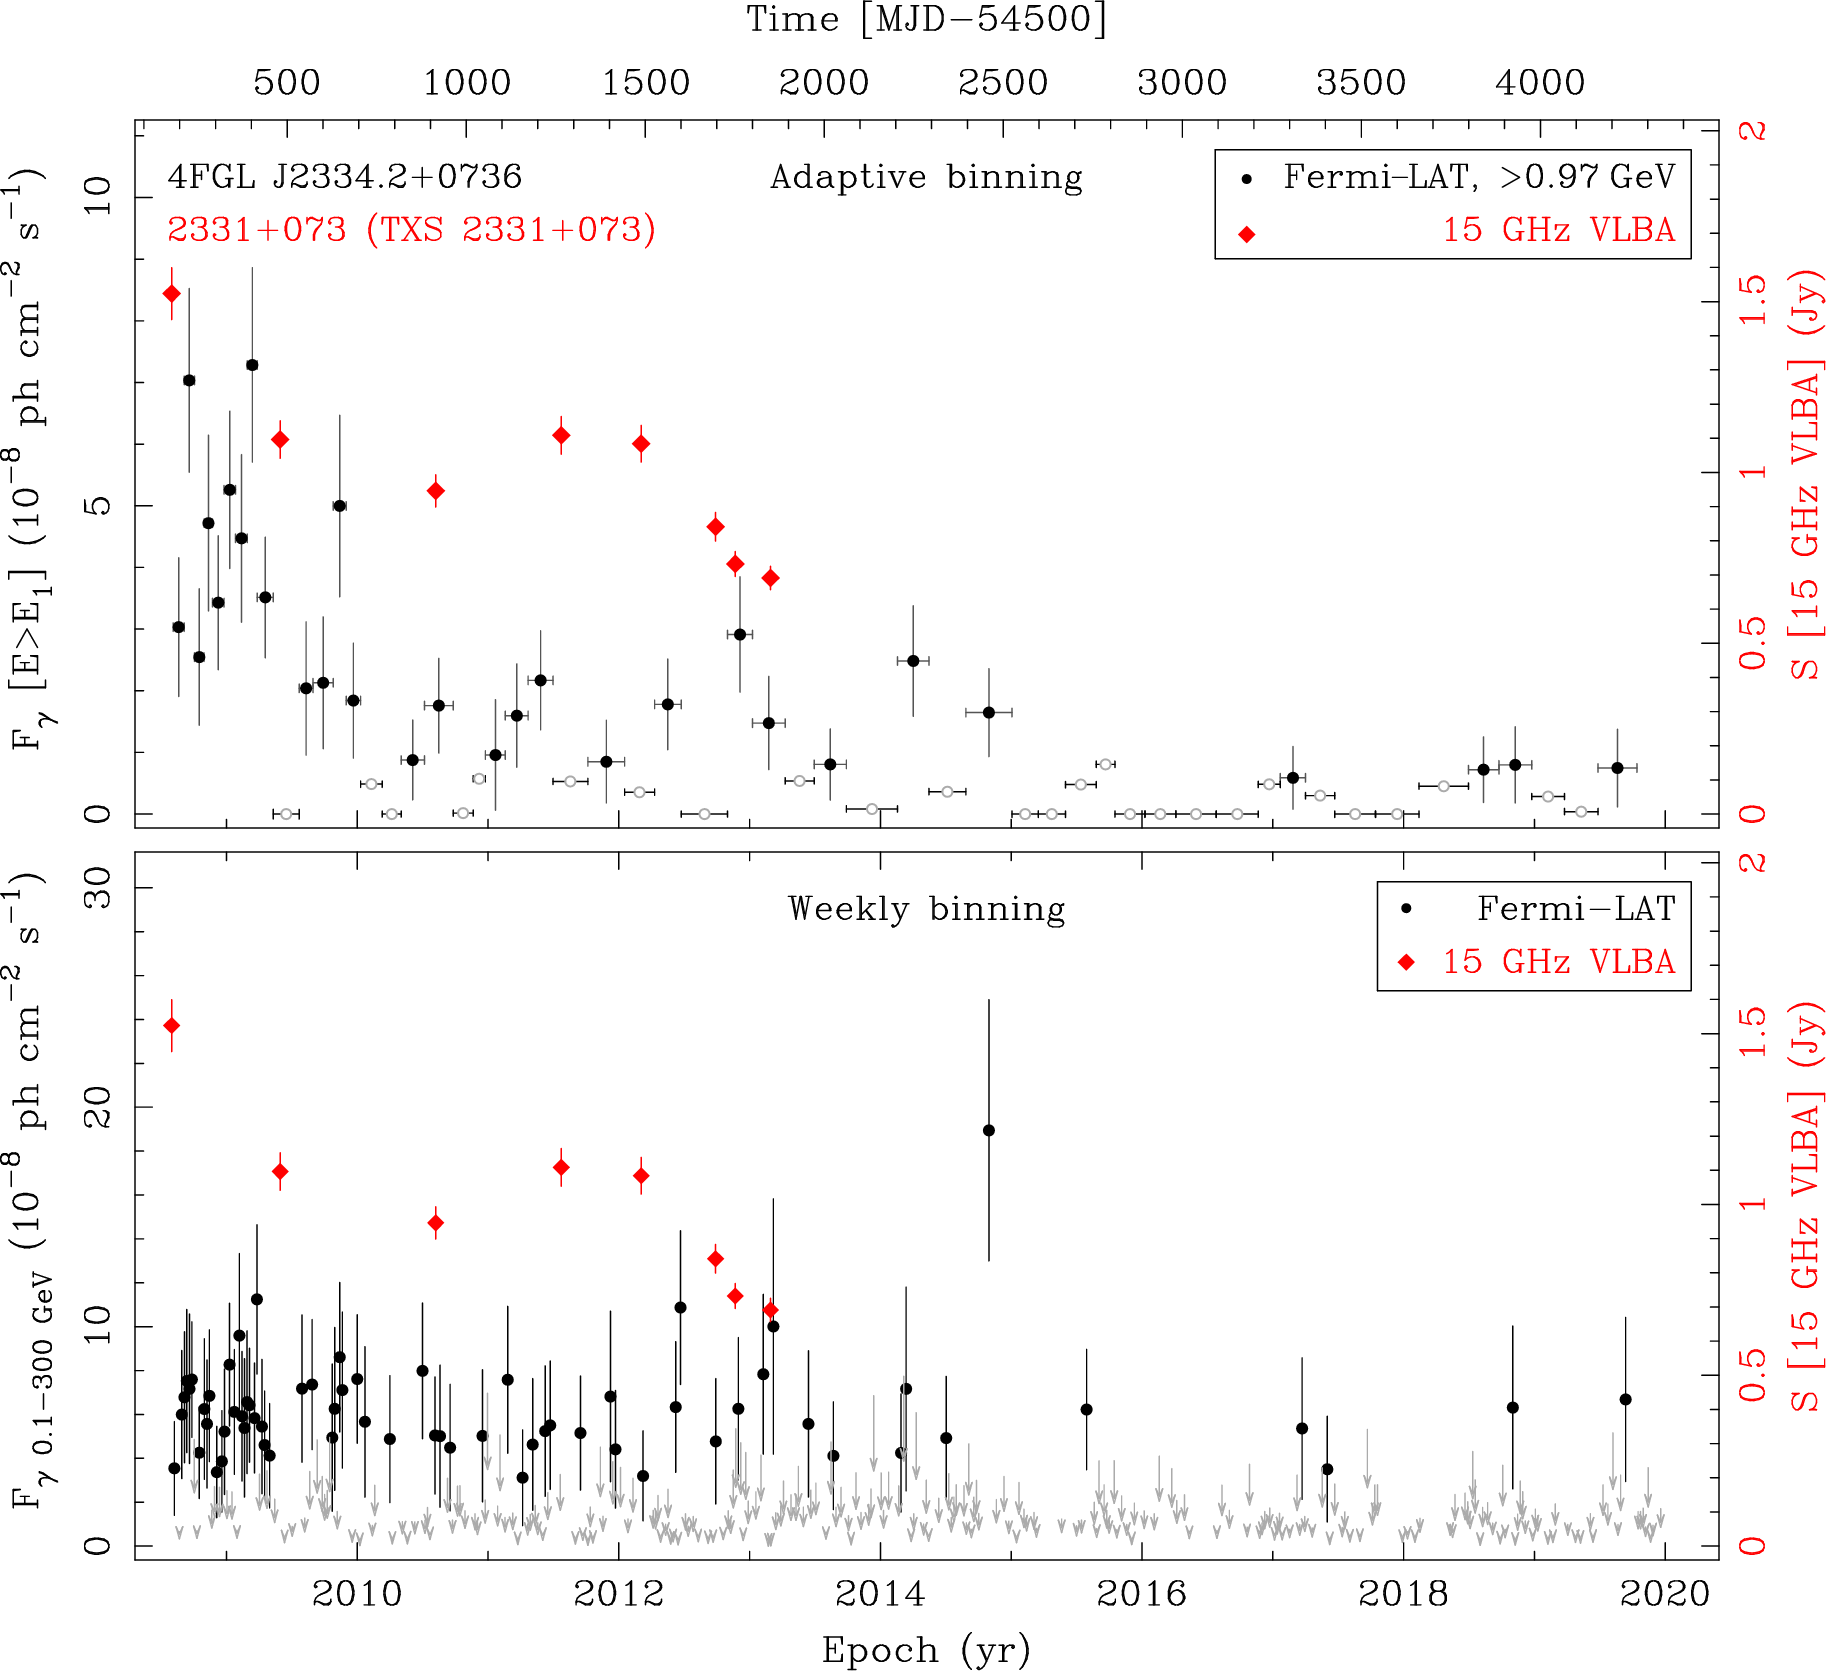 Fermi LAT and 15 GHz VLBA Light Curves